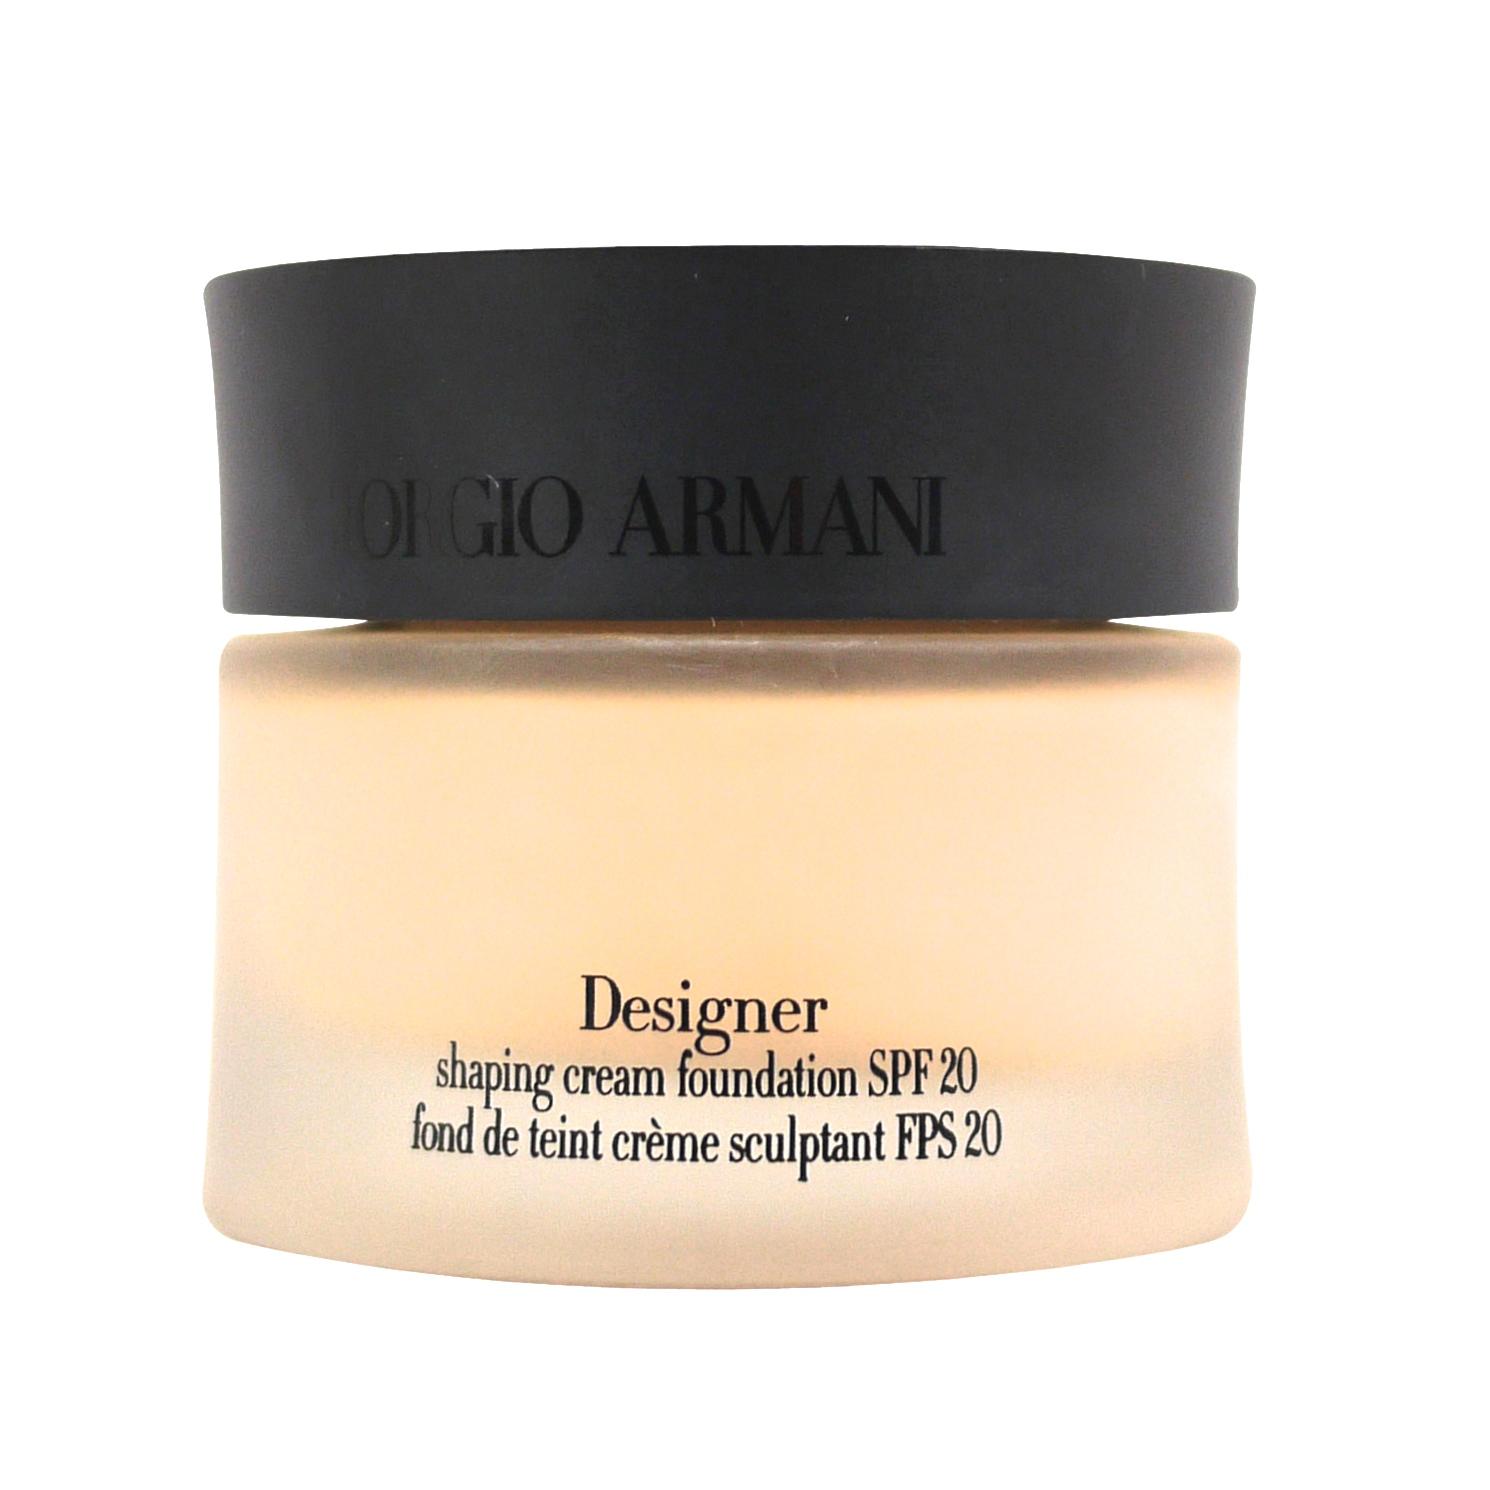 Giorgio Armani Shaping Cream Foundation Warm Beige 5  - Best  deals on Giorgio Armani cosmetics